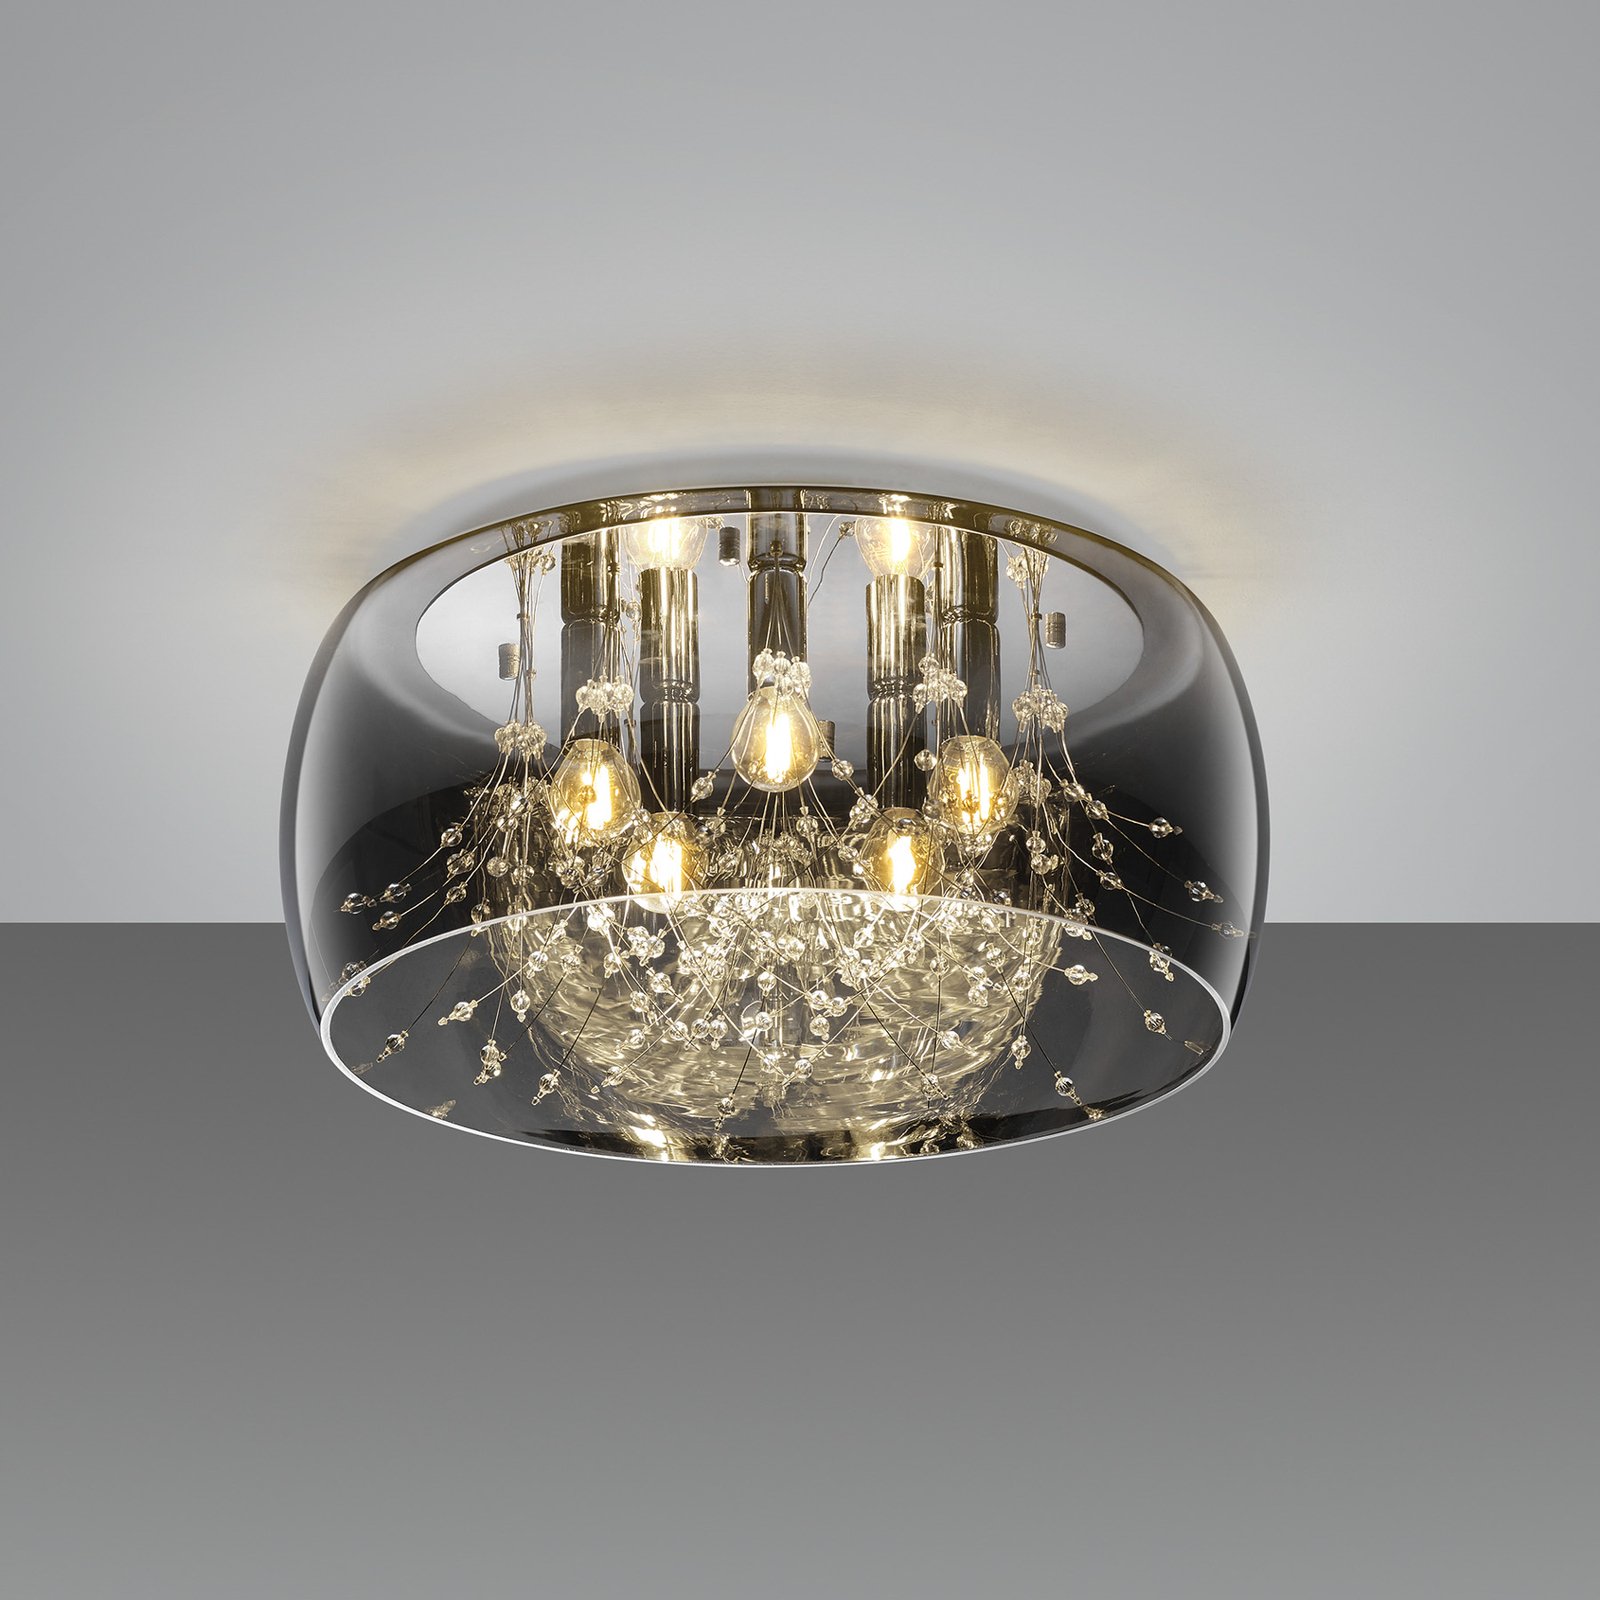 Crystel loftslampe af glas, krom, Ø 50 cm